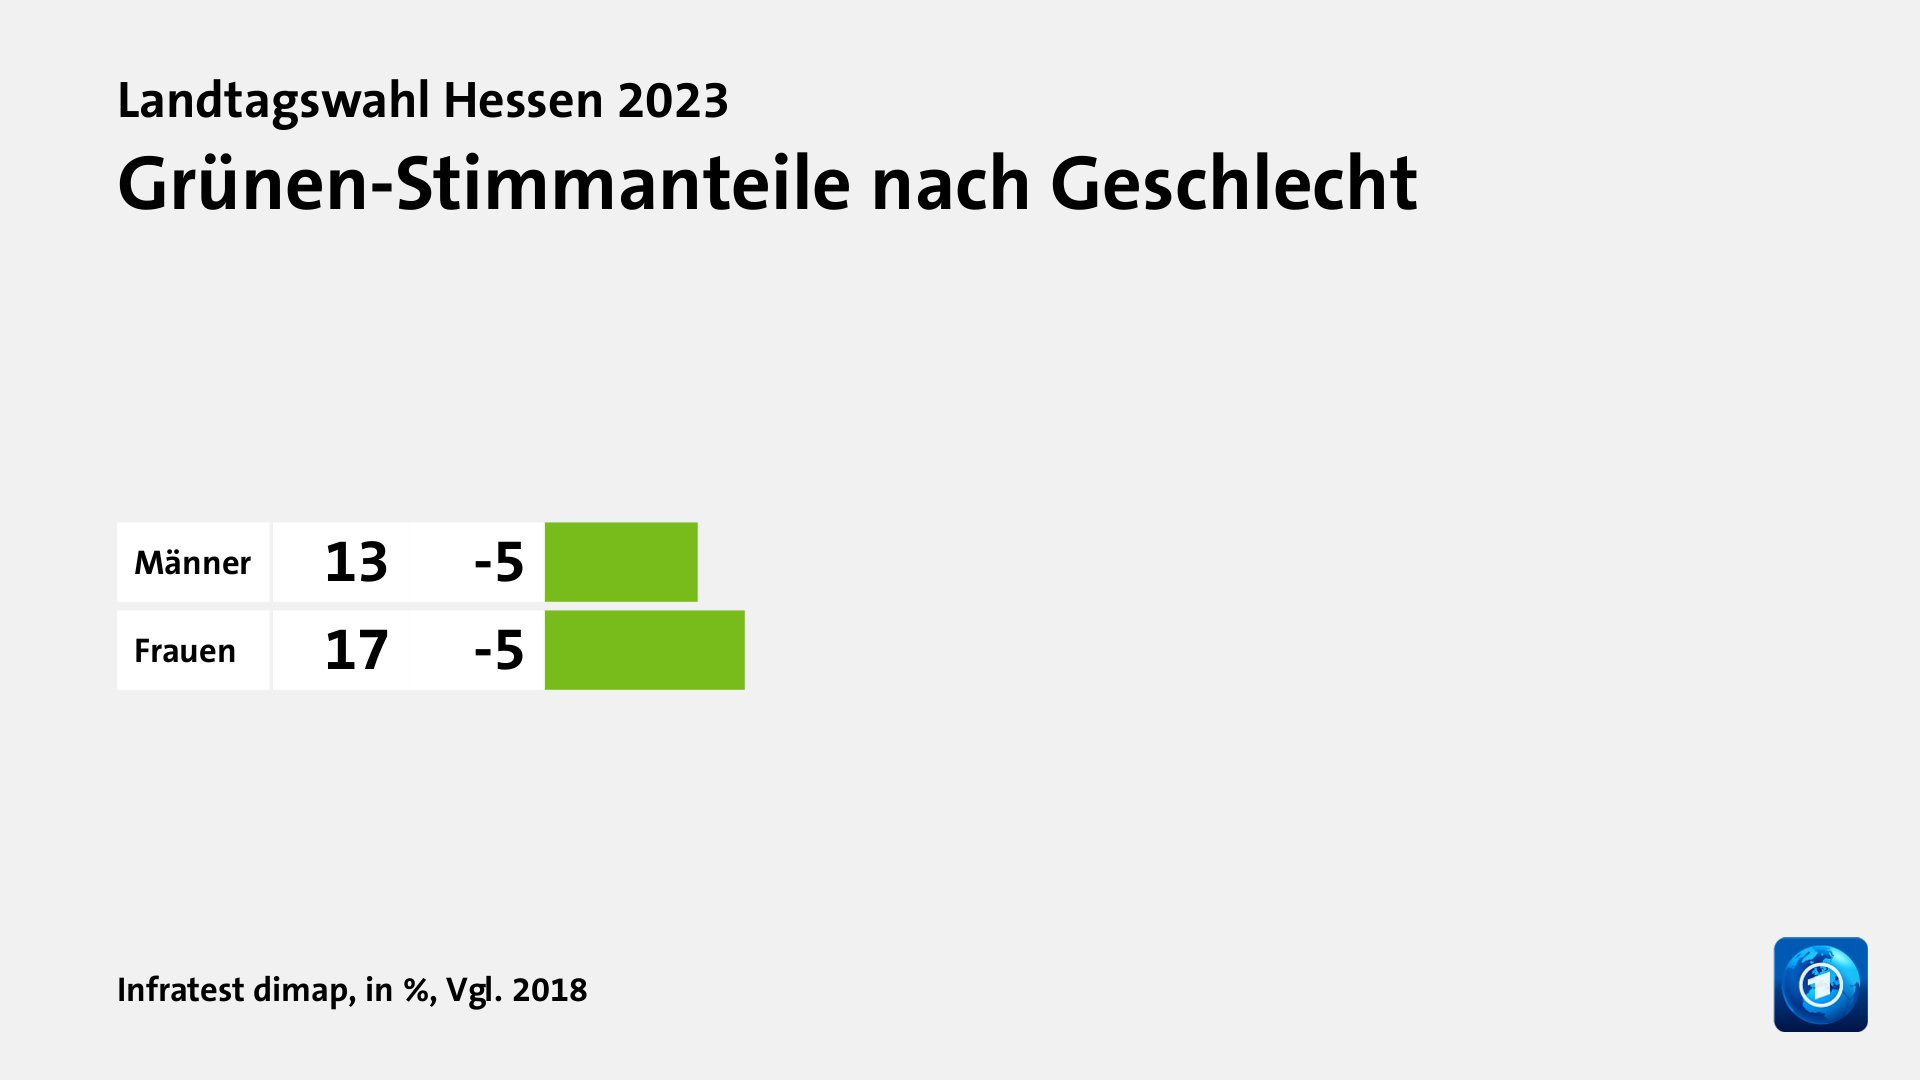 Grünen-Stimmanteile nach Geschlecht, in %, Vgl. 2018: Männer 13, Frauen 17, Quelle: Infratest dimap